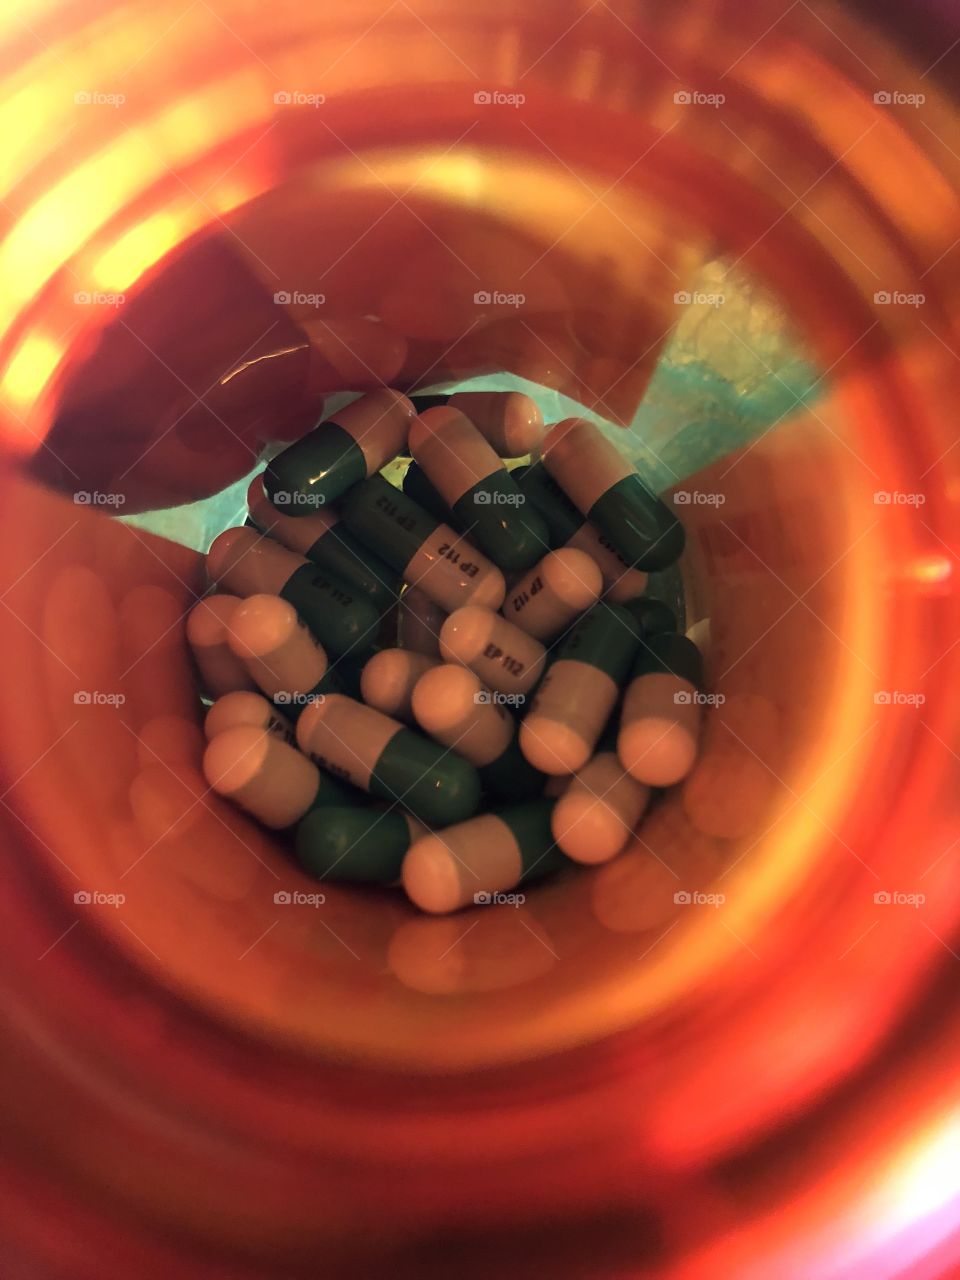 Medication inside a pill bottle